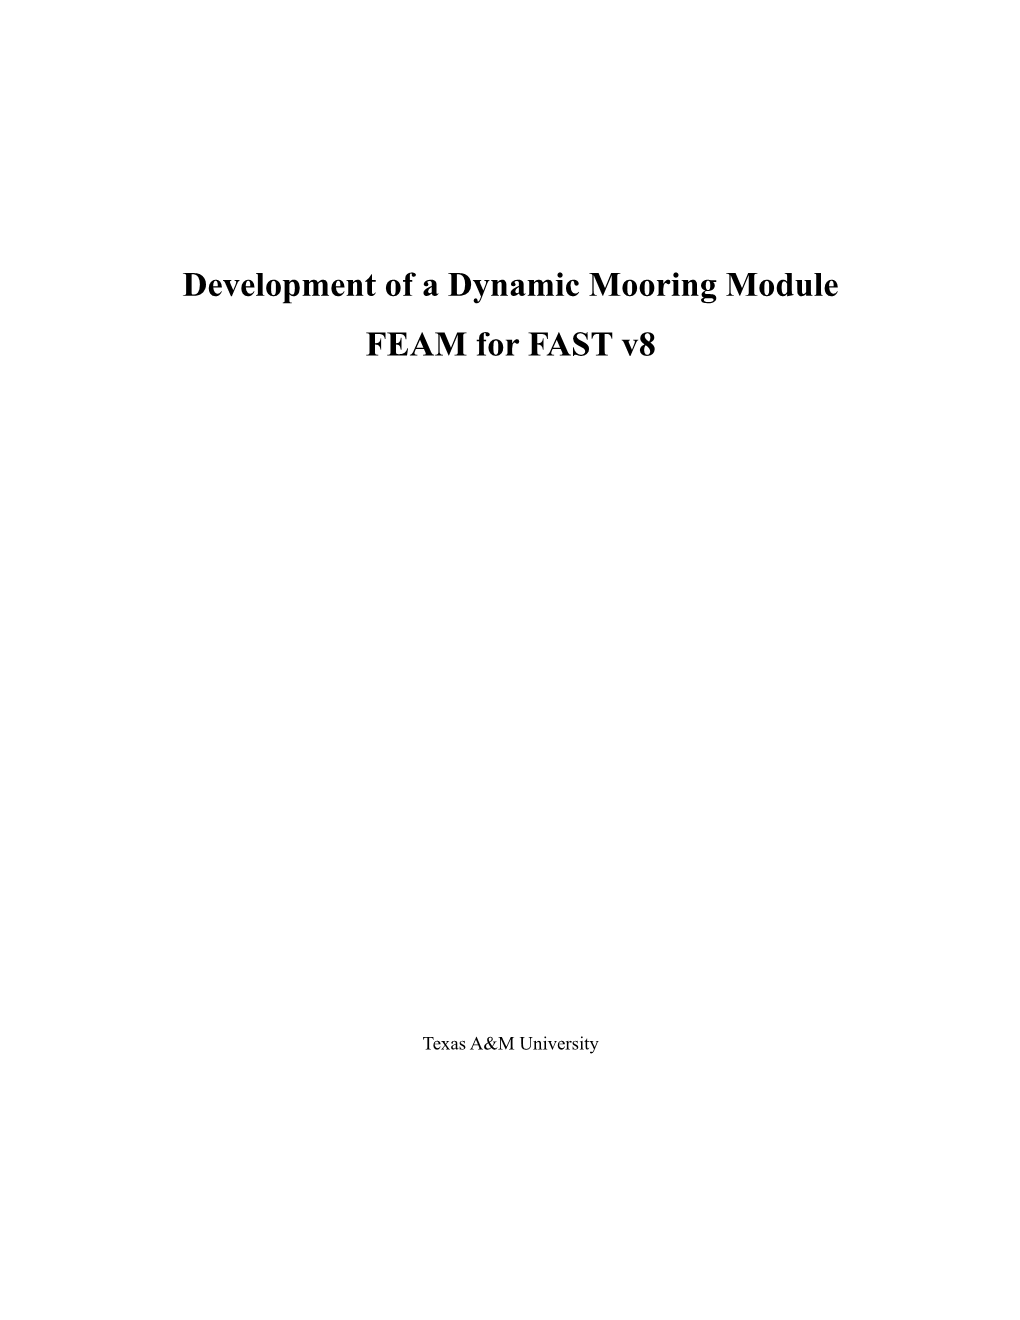 Development of a Dynamic Mooring Module FEAM for FAST V8